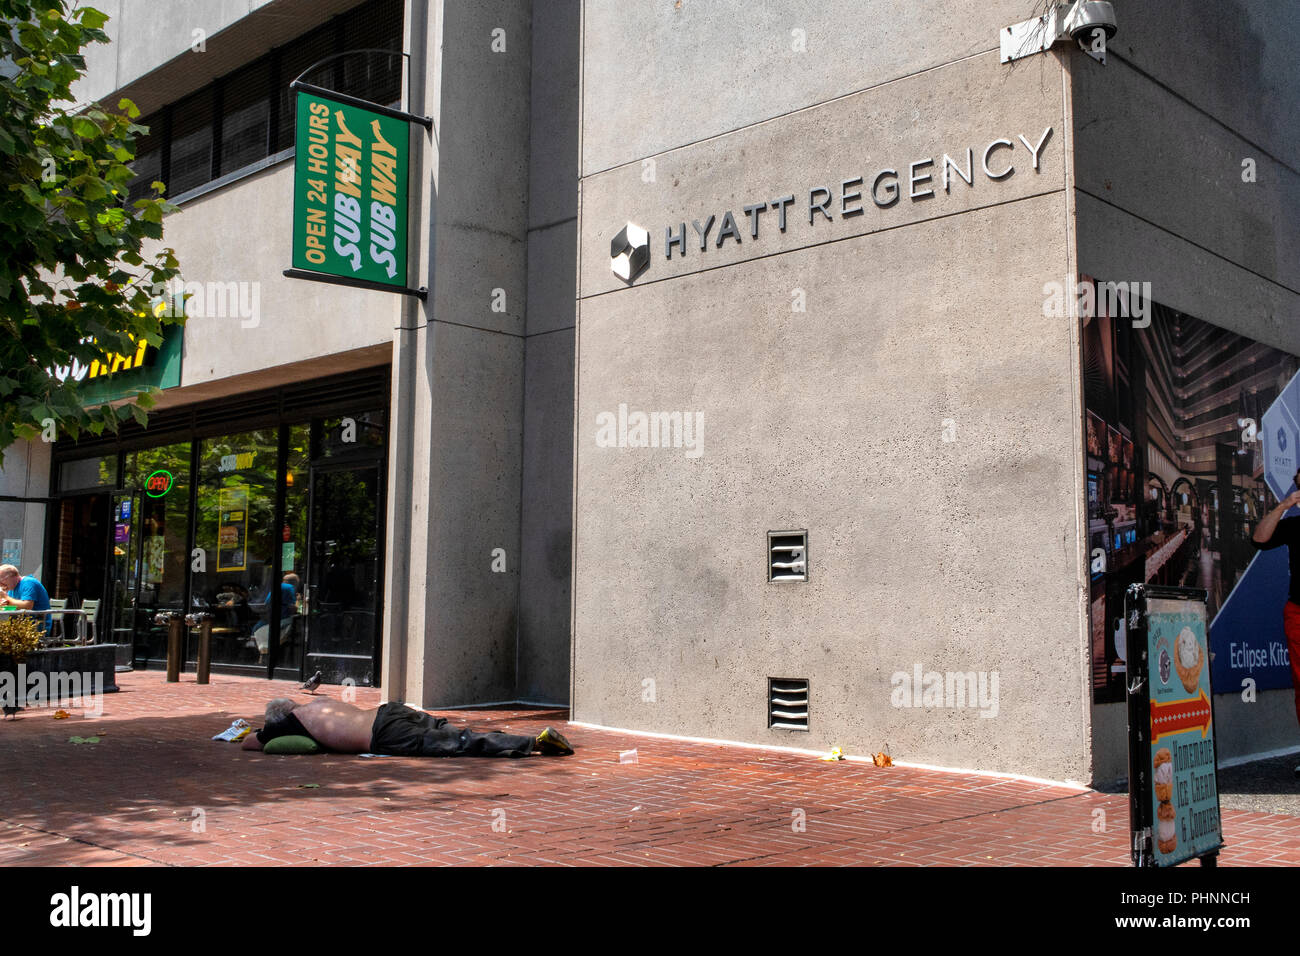 A homeless man sleeps on the street outside the Hyatt Regency hotel and a Subway in San Francisco, California. Stock Photo